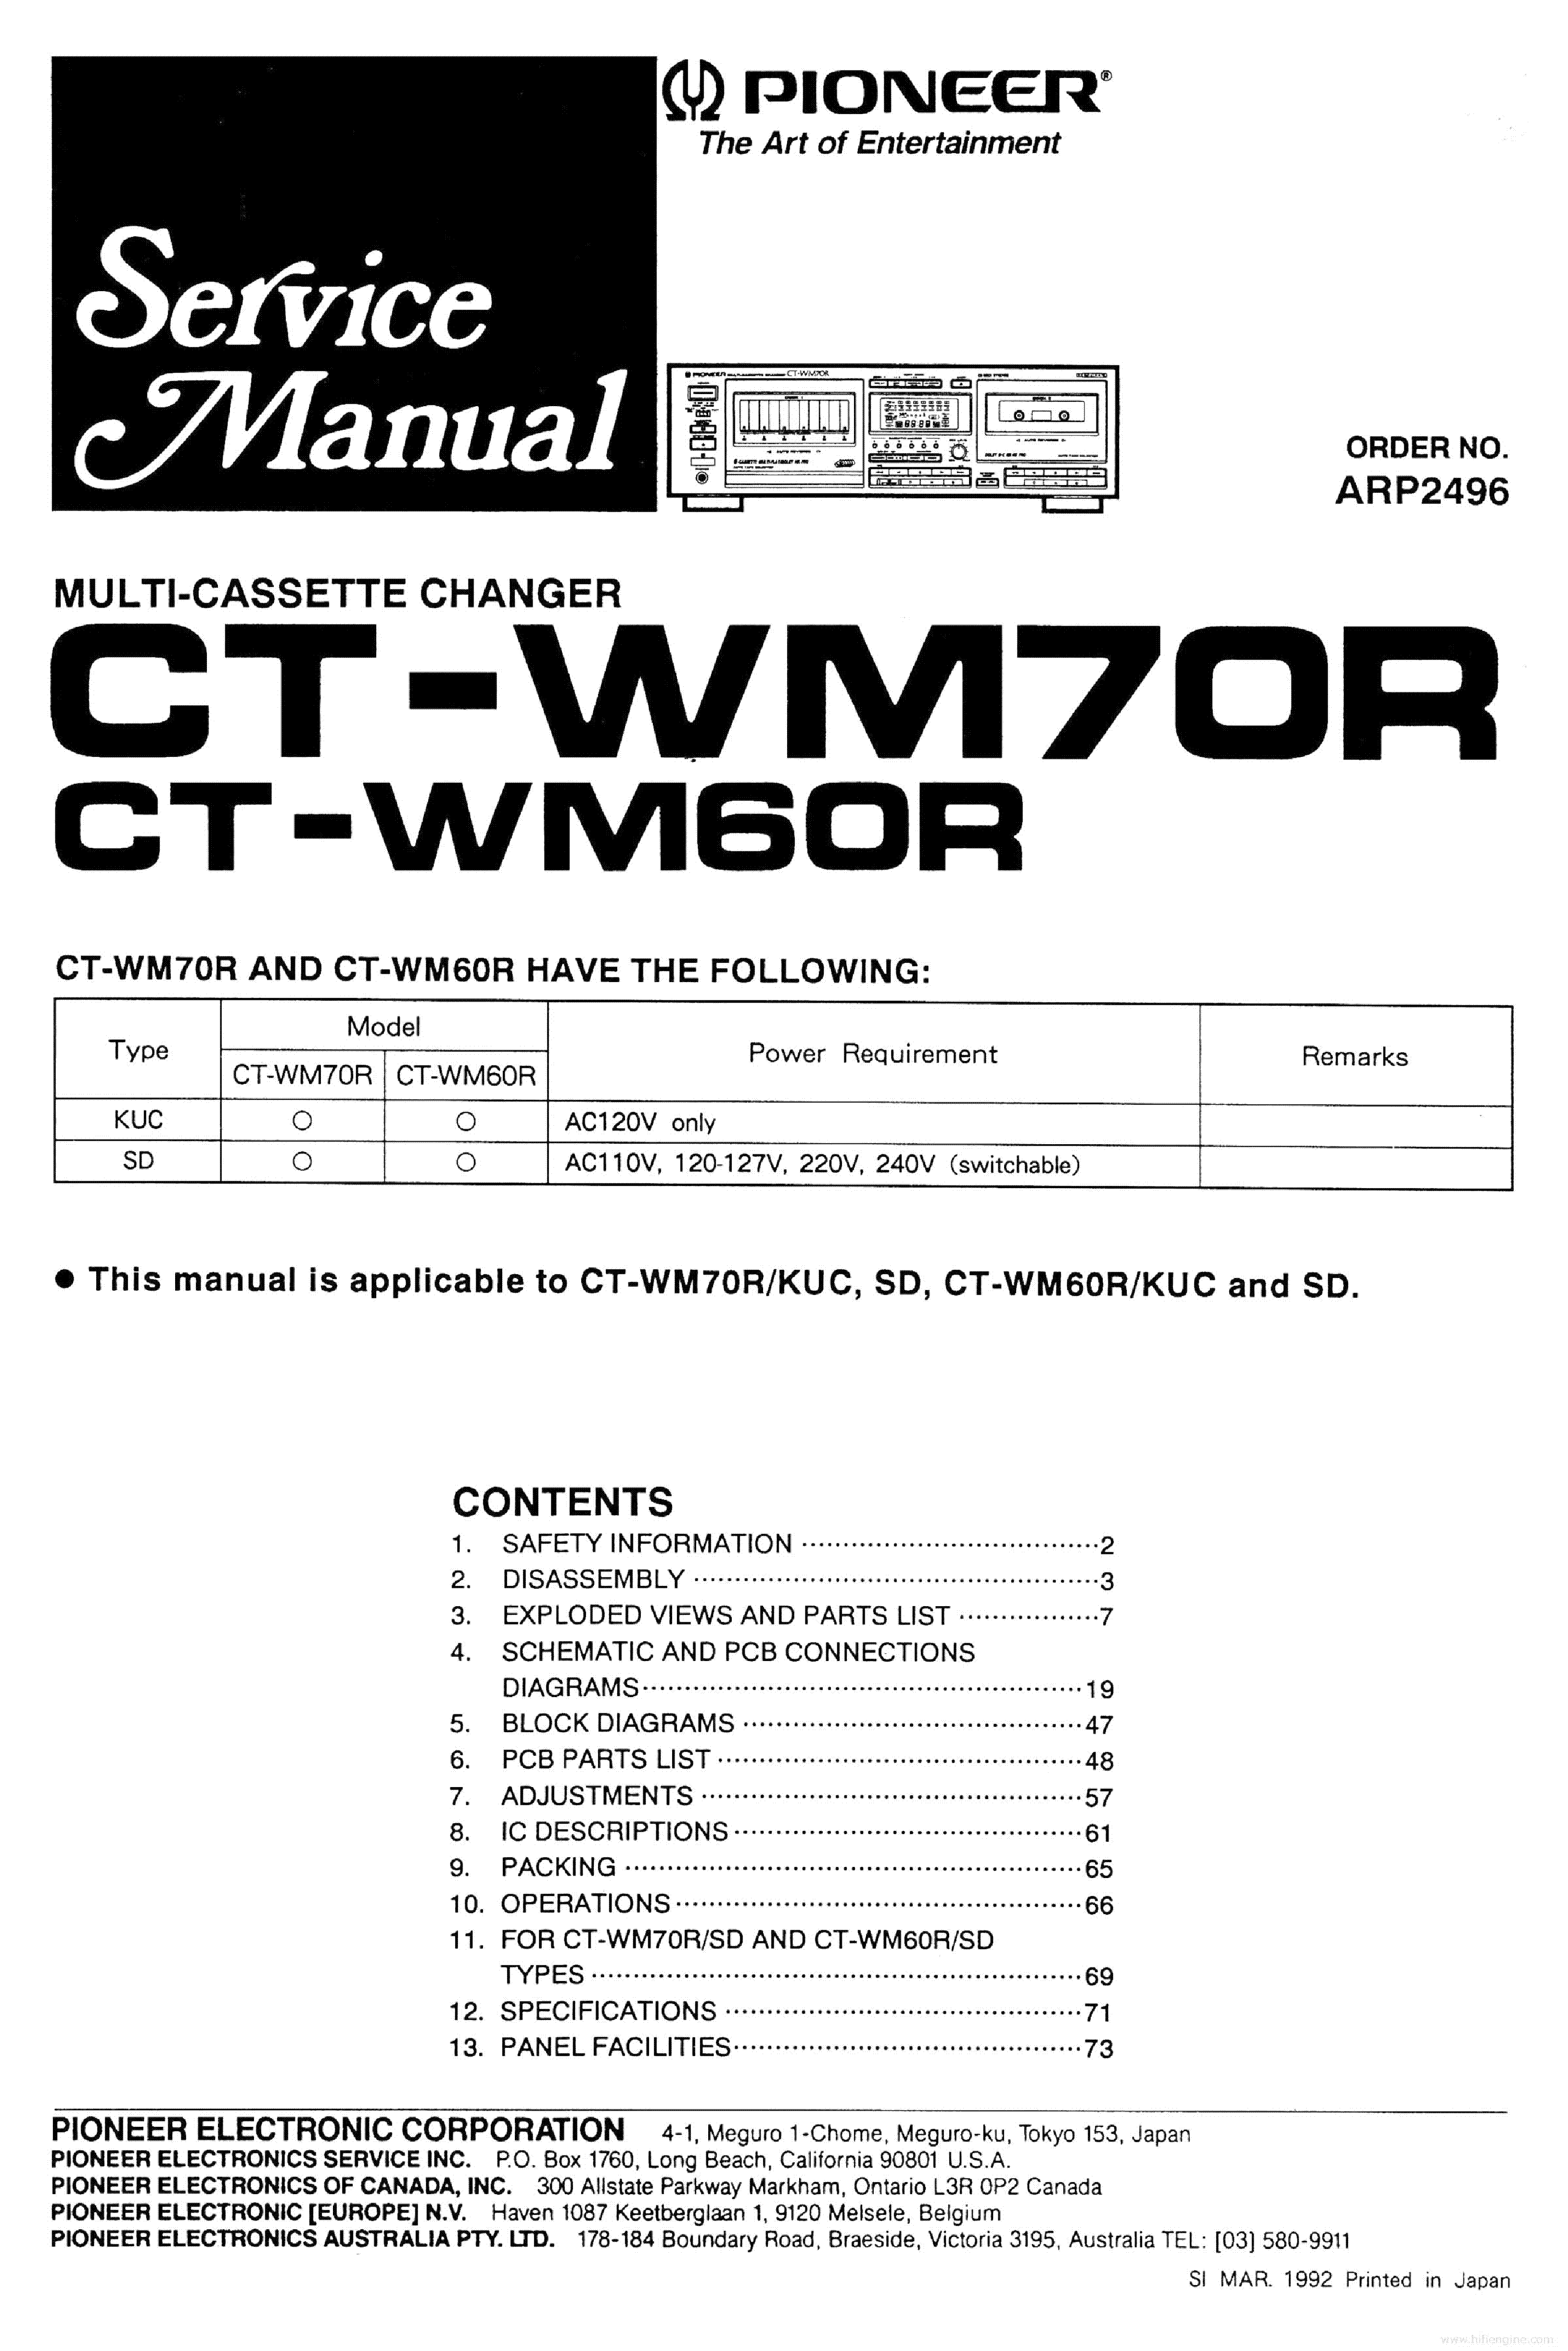 PIONEER CT-WM70R CT-WM60R service manual (1st page)